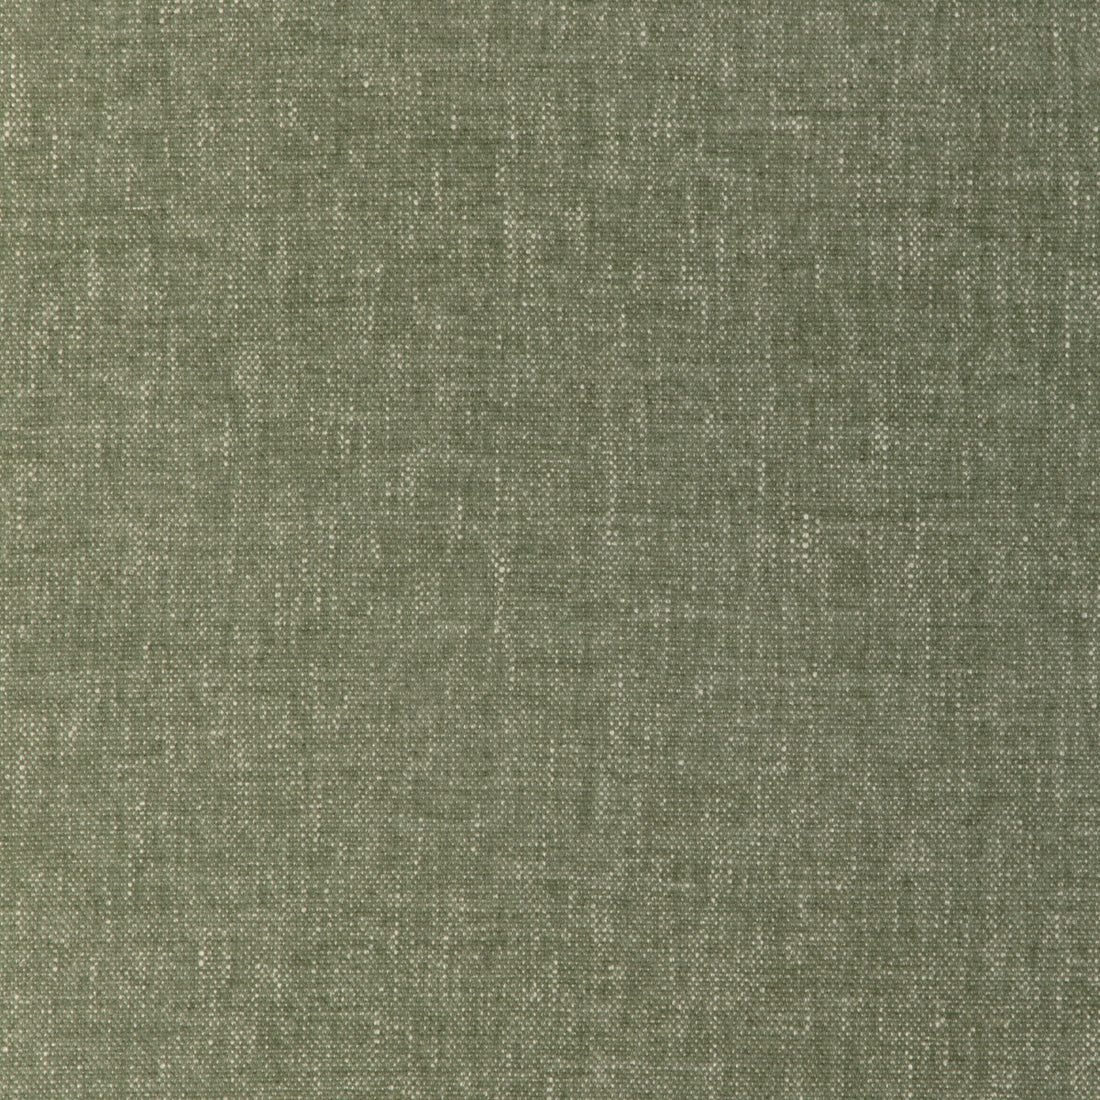 Kravet Smart fabric in 36663-30 color - pattern 36663.30.0 - by Kravet Smart in the Performance Kravetarmor collection